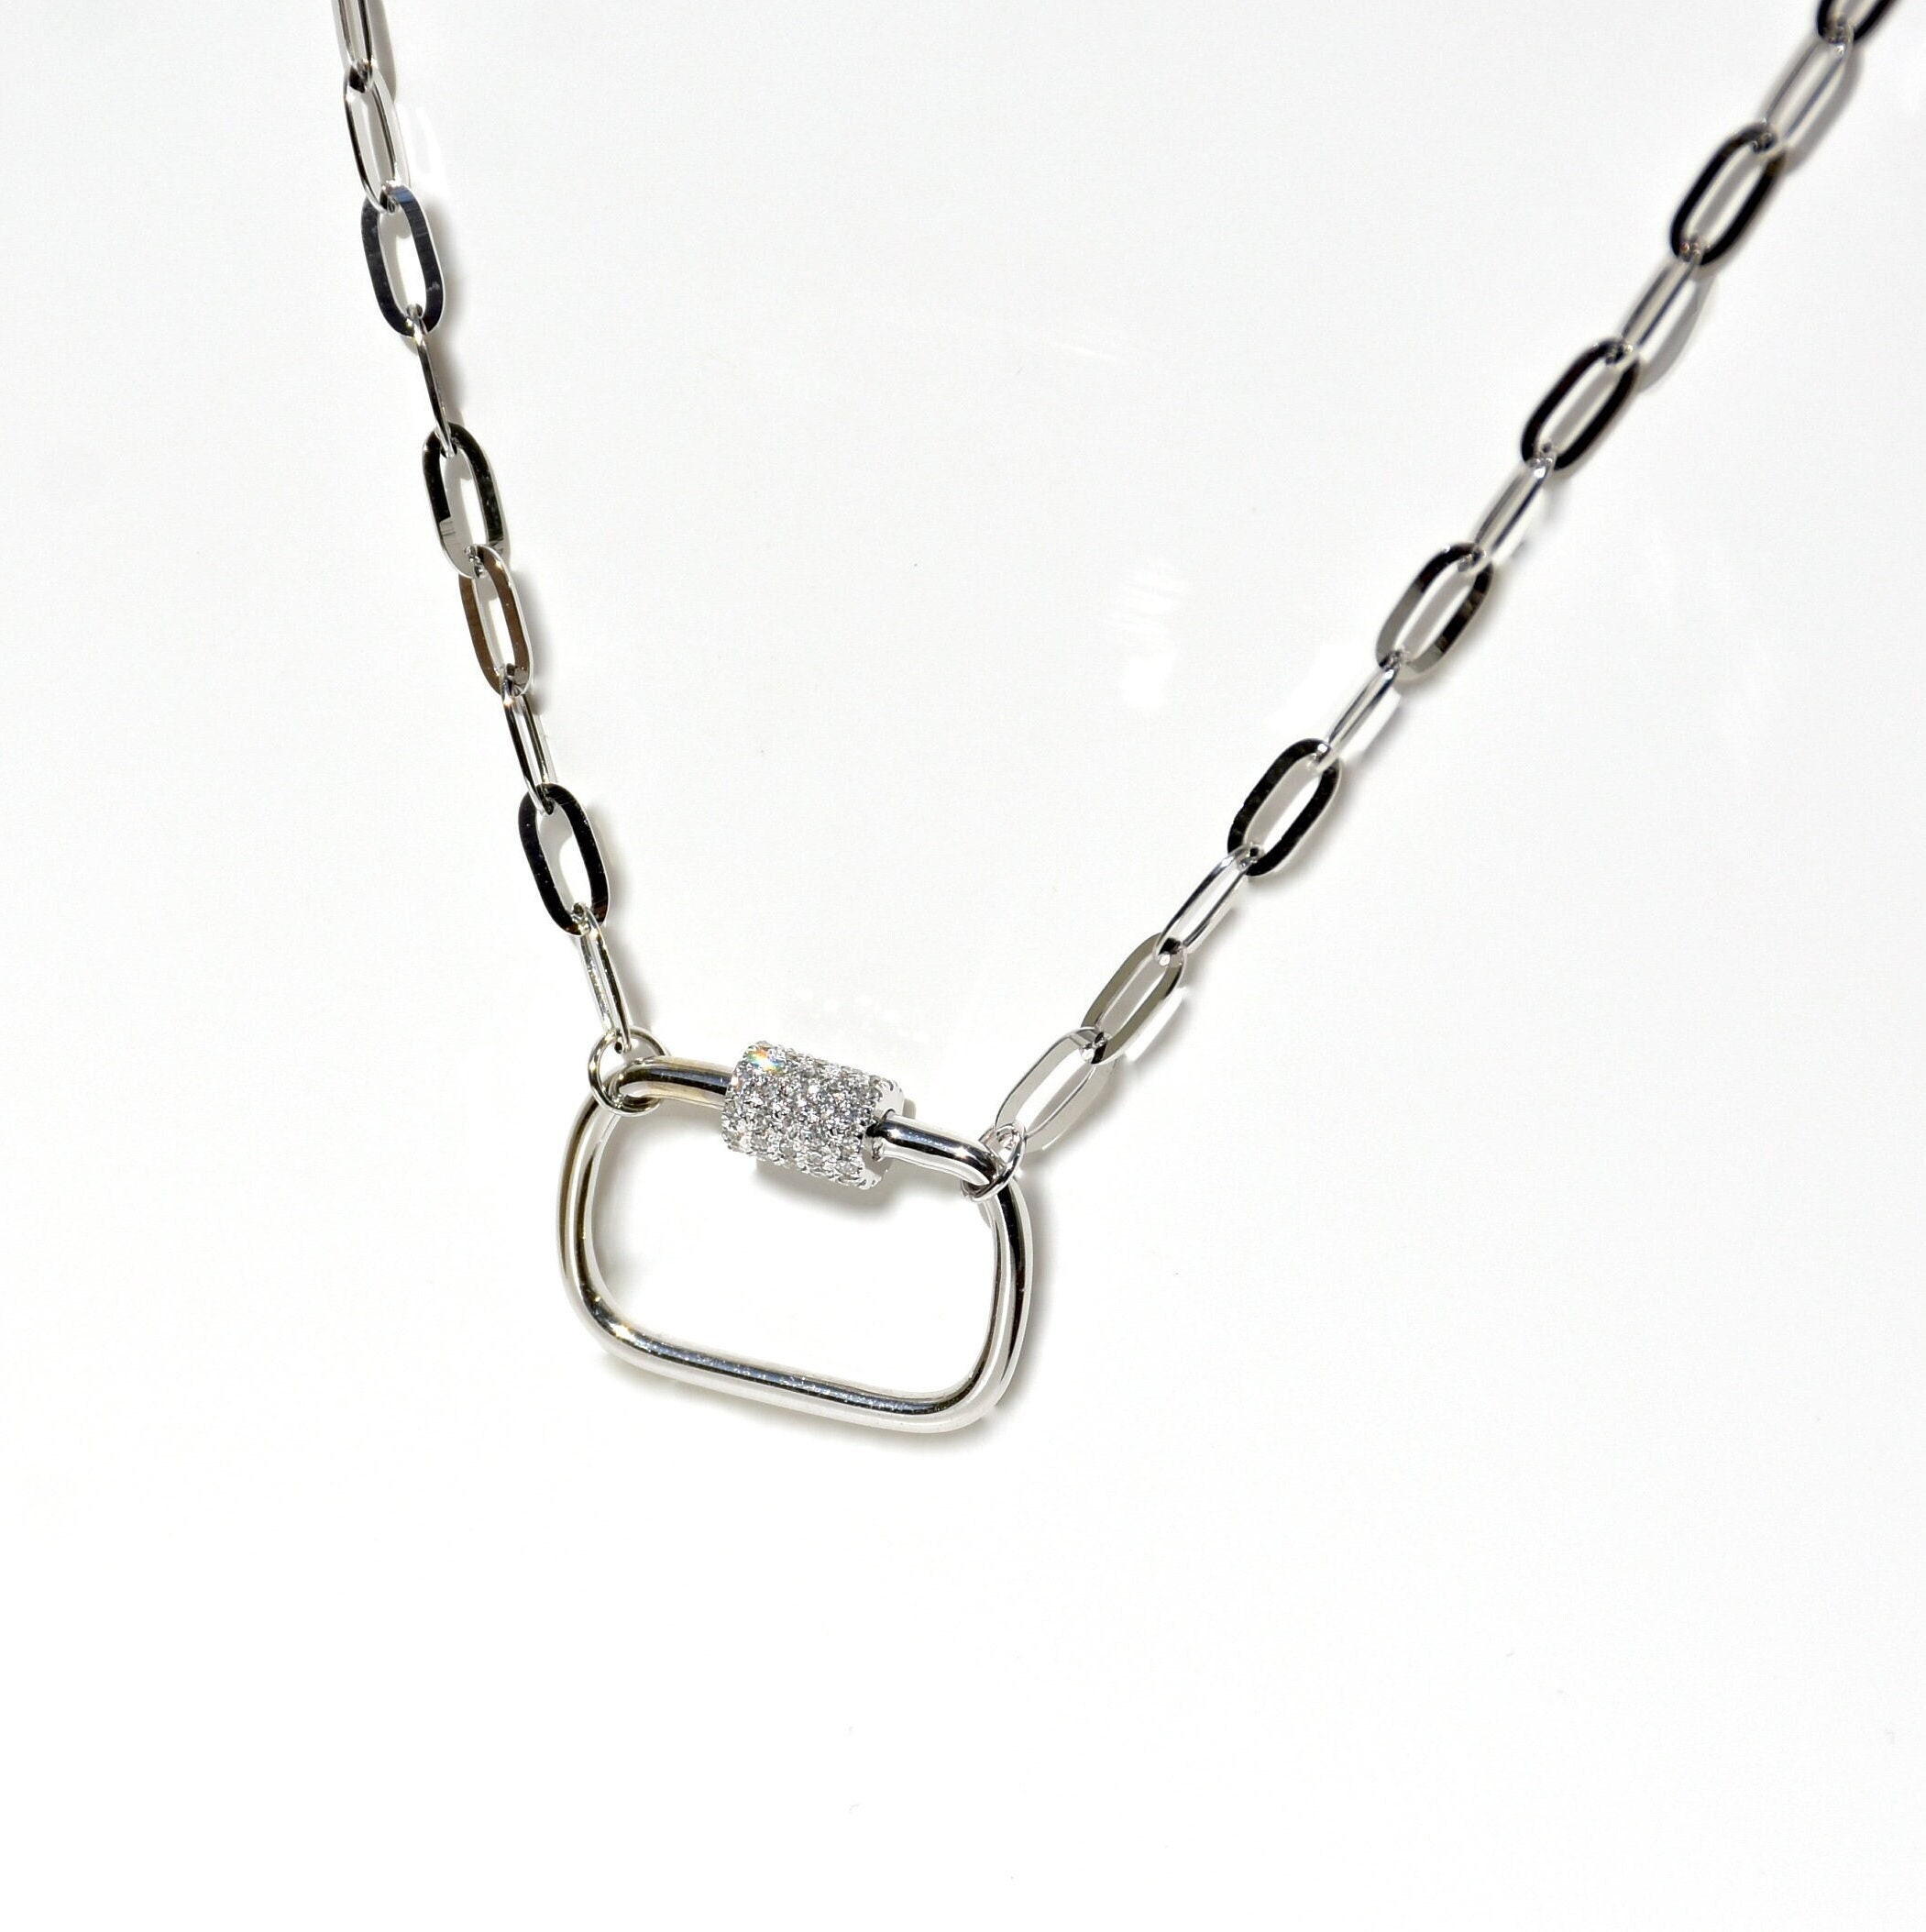 Diamond Carabiner Enhancer Lock Charm  14k Gold Carabiner Clasp and  Pendant, Herringbone Chain, Flat Snake Chain Necklace, Gift for Her